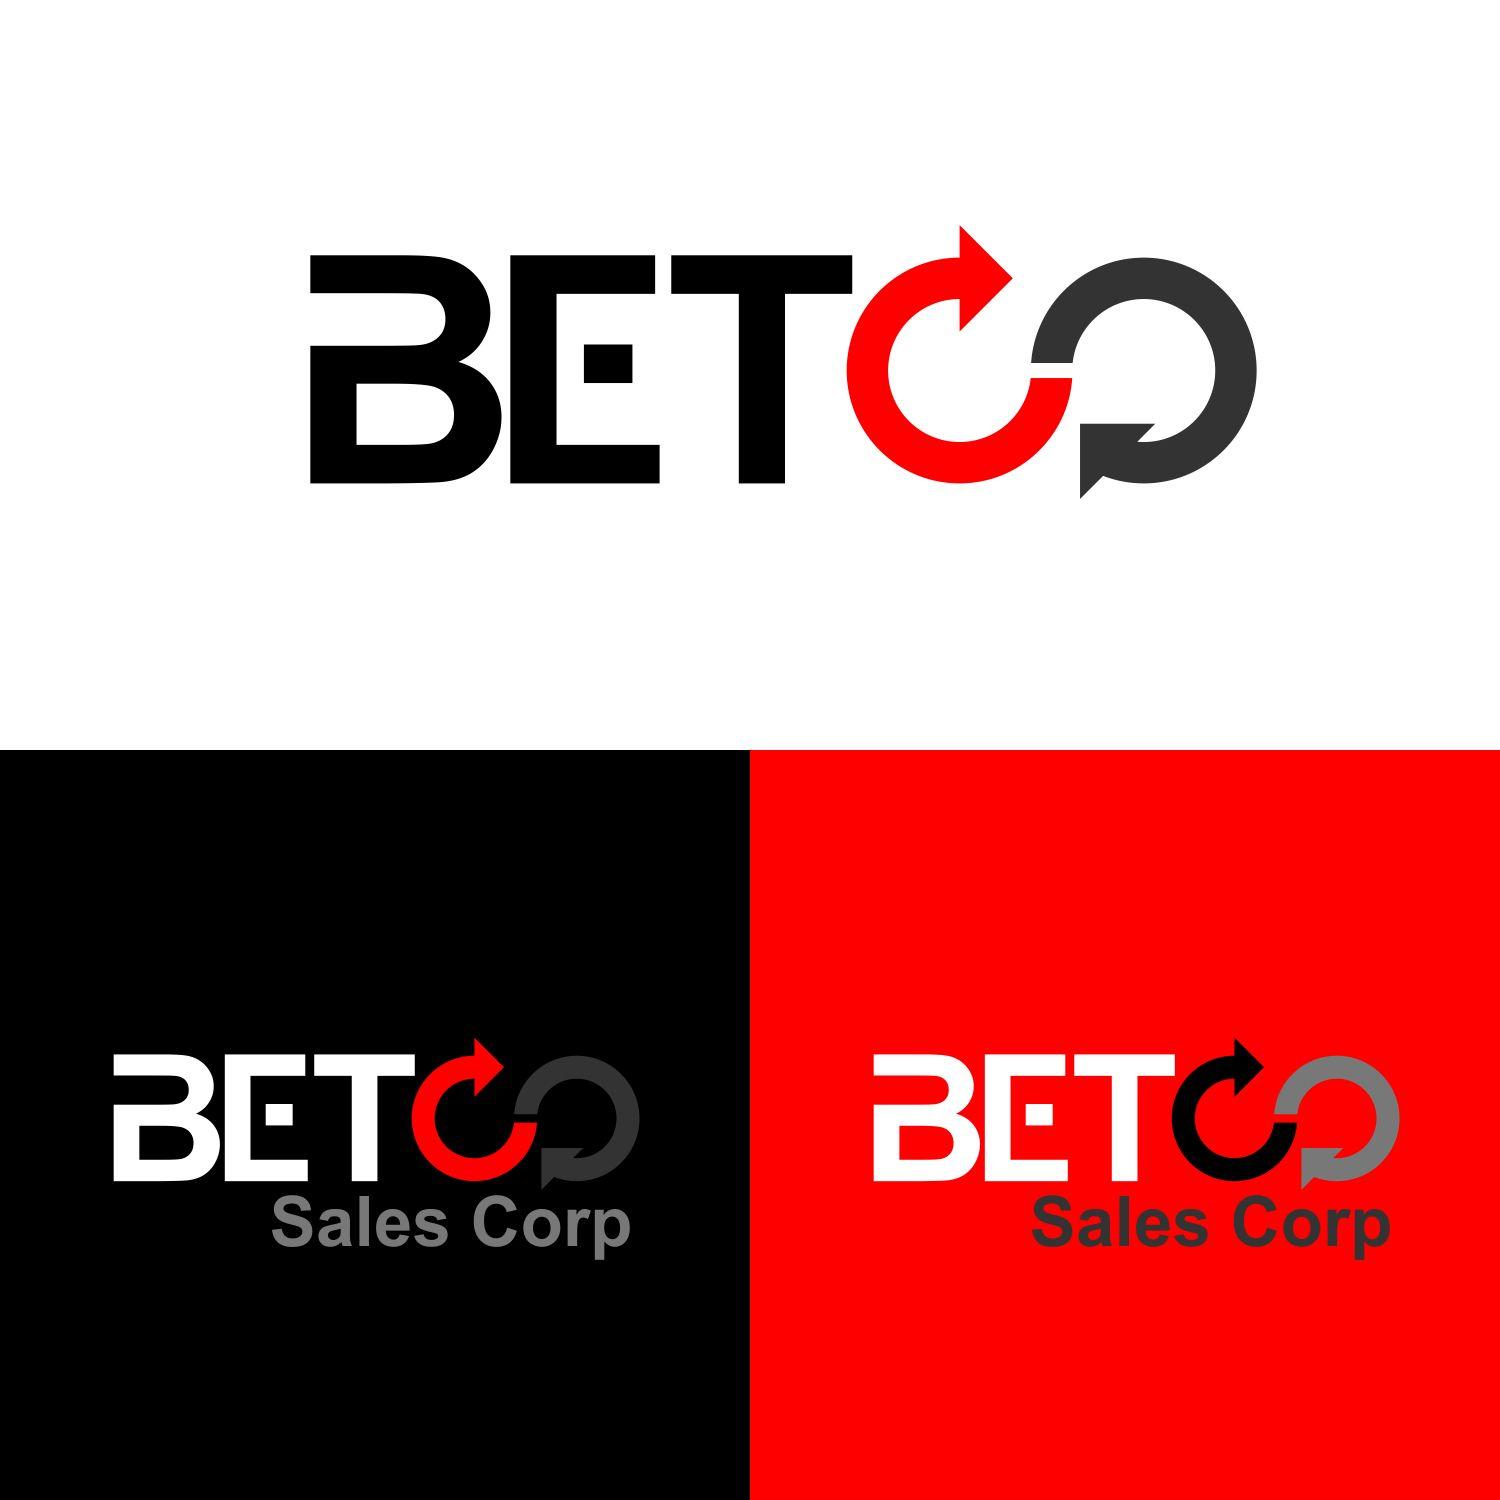 Betco Logo - Logo Design for Betco Sales Corp by Cherlyndo Paterias. Design